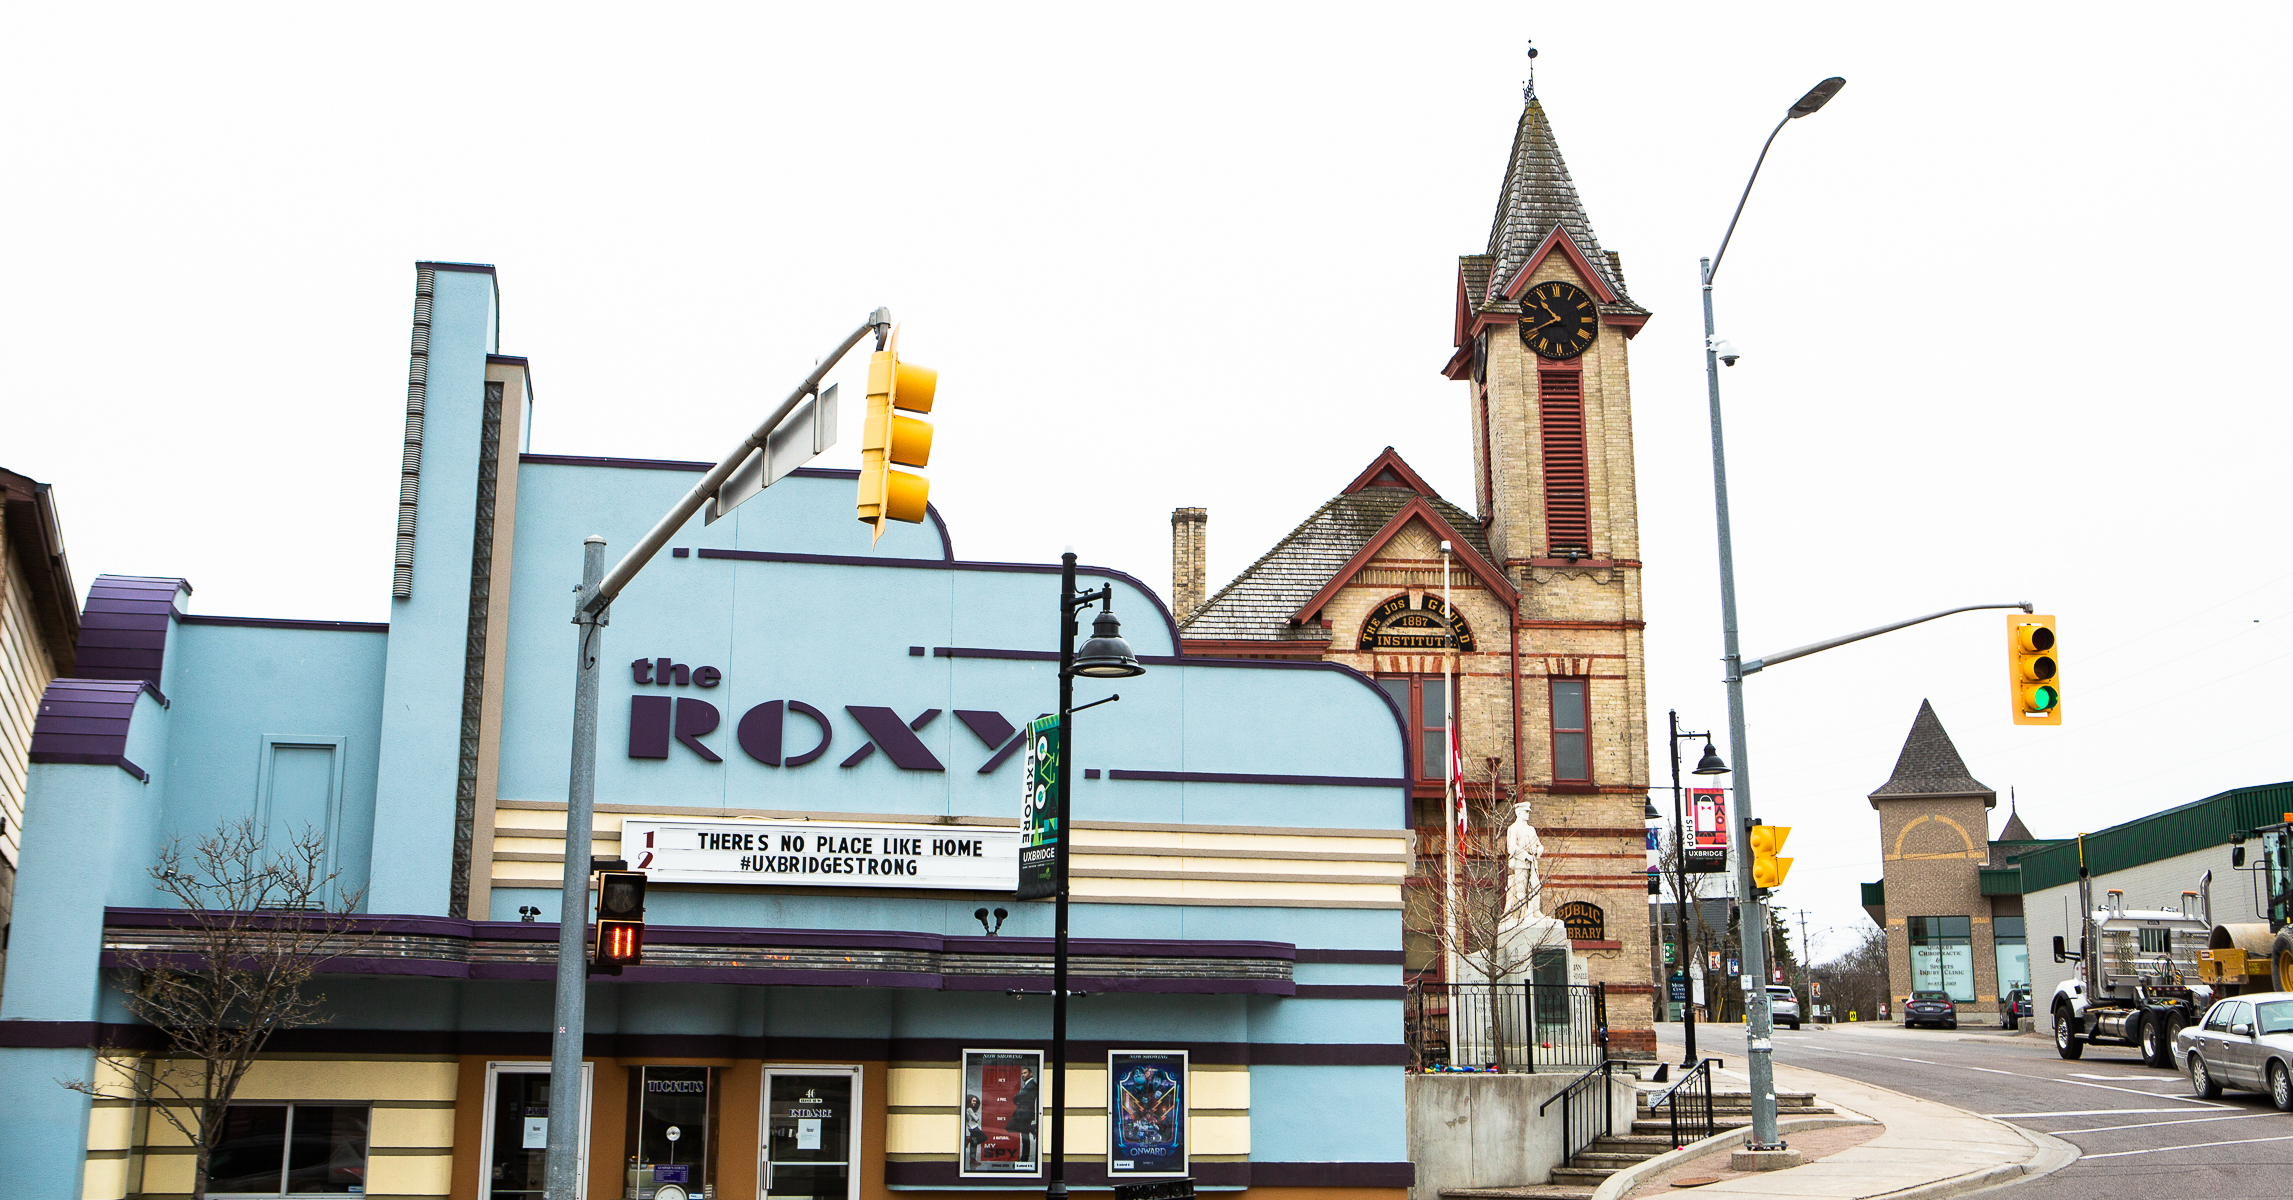 Exterior of the Roxy Theatre in Downtown Uxbridge